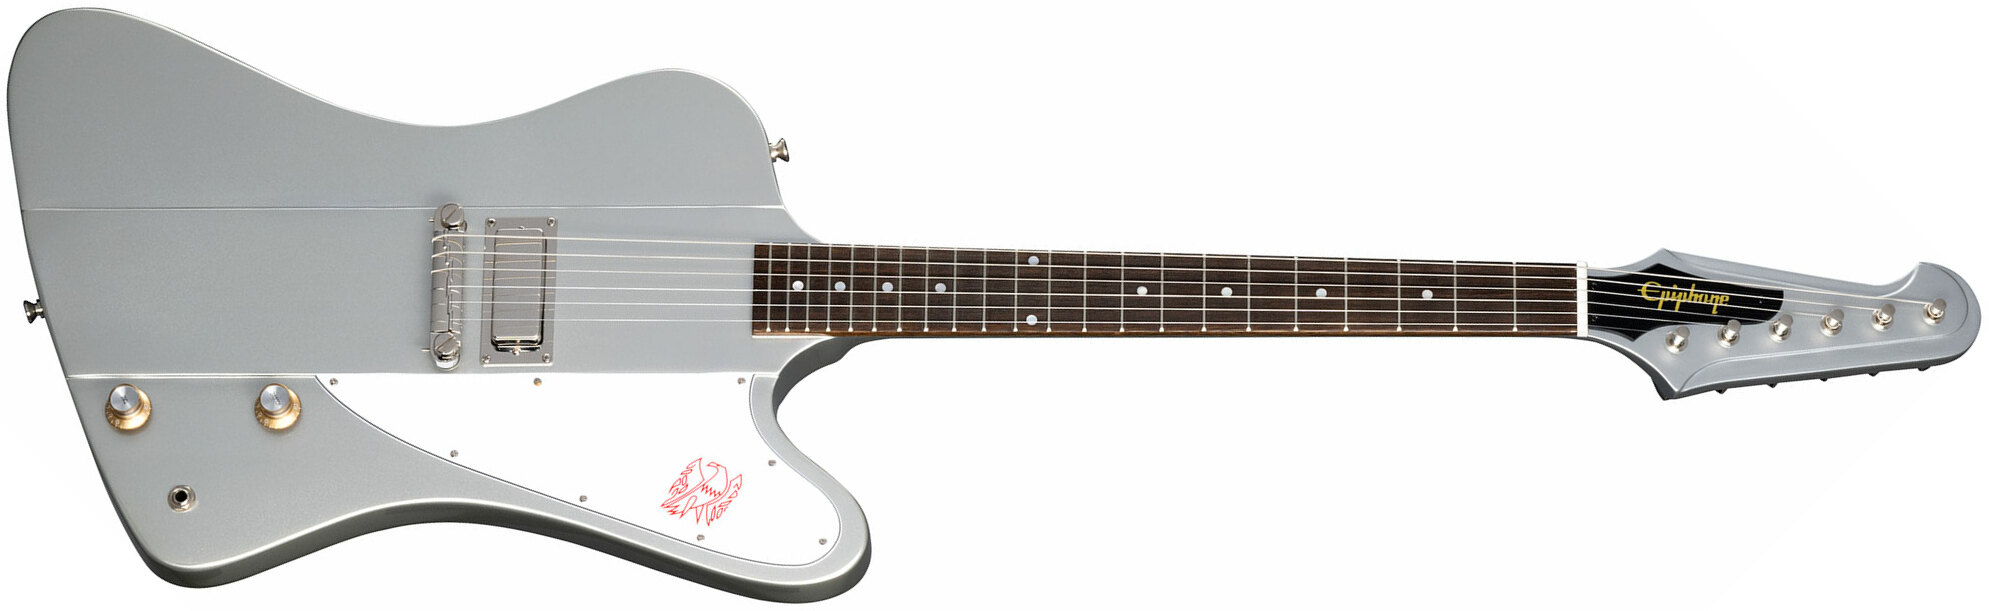 Epiphone Firebird I 1963 Inspired By Gibson Custom 1mh Ht Lau - Silver Mist - Guitarra electrica retro rock - Main picture